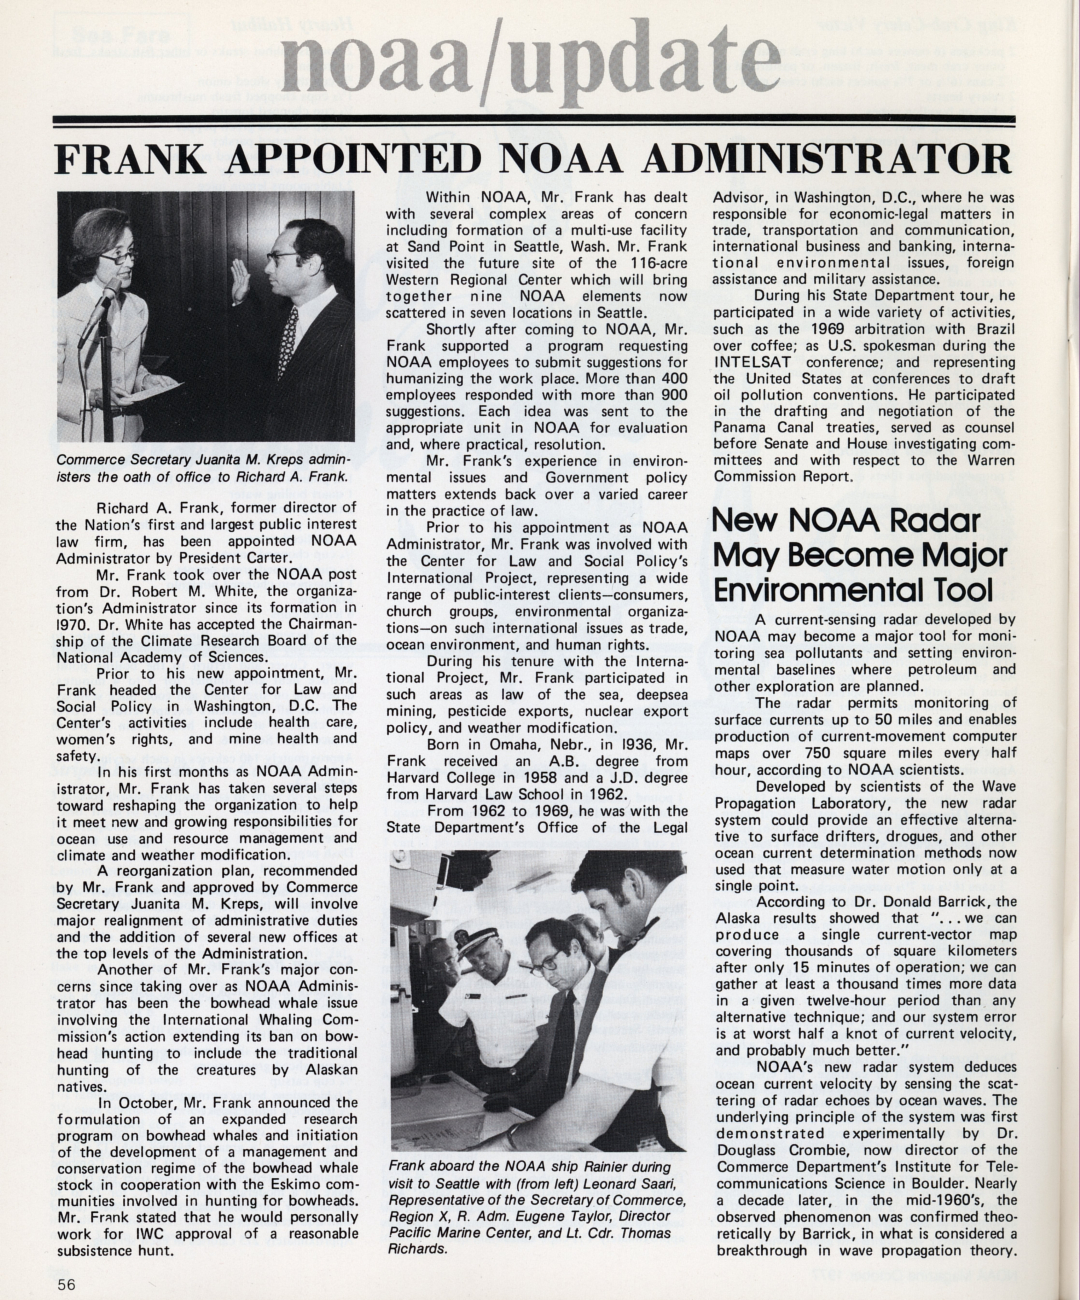 NOAA Magazine article on Richard Frank, second Administrator of NOAA